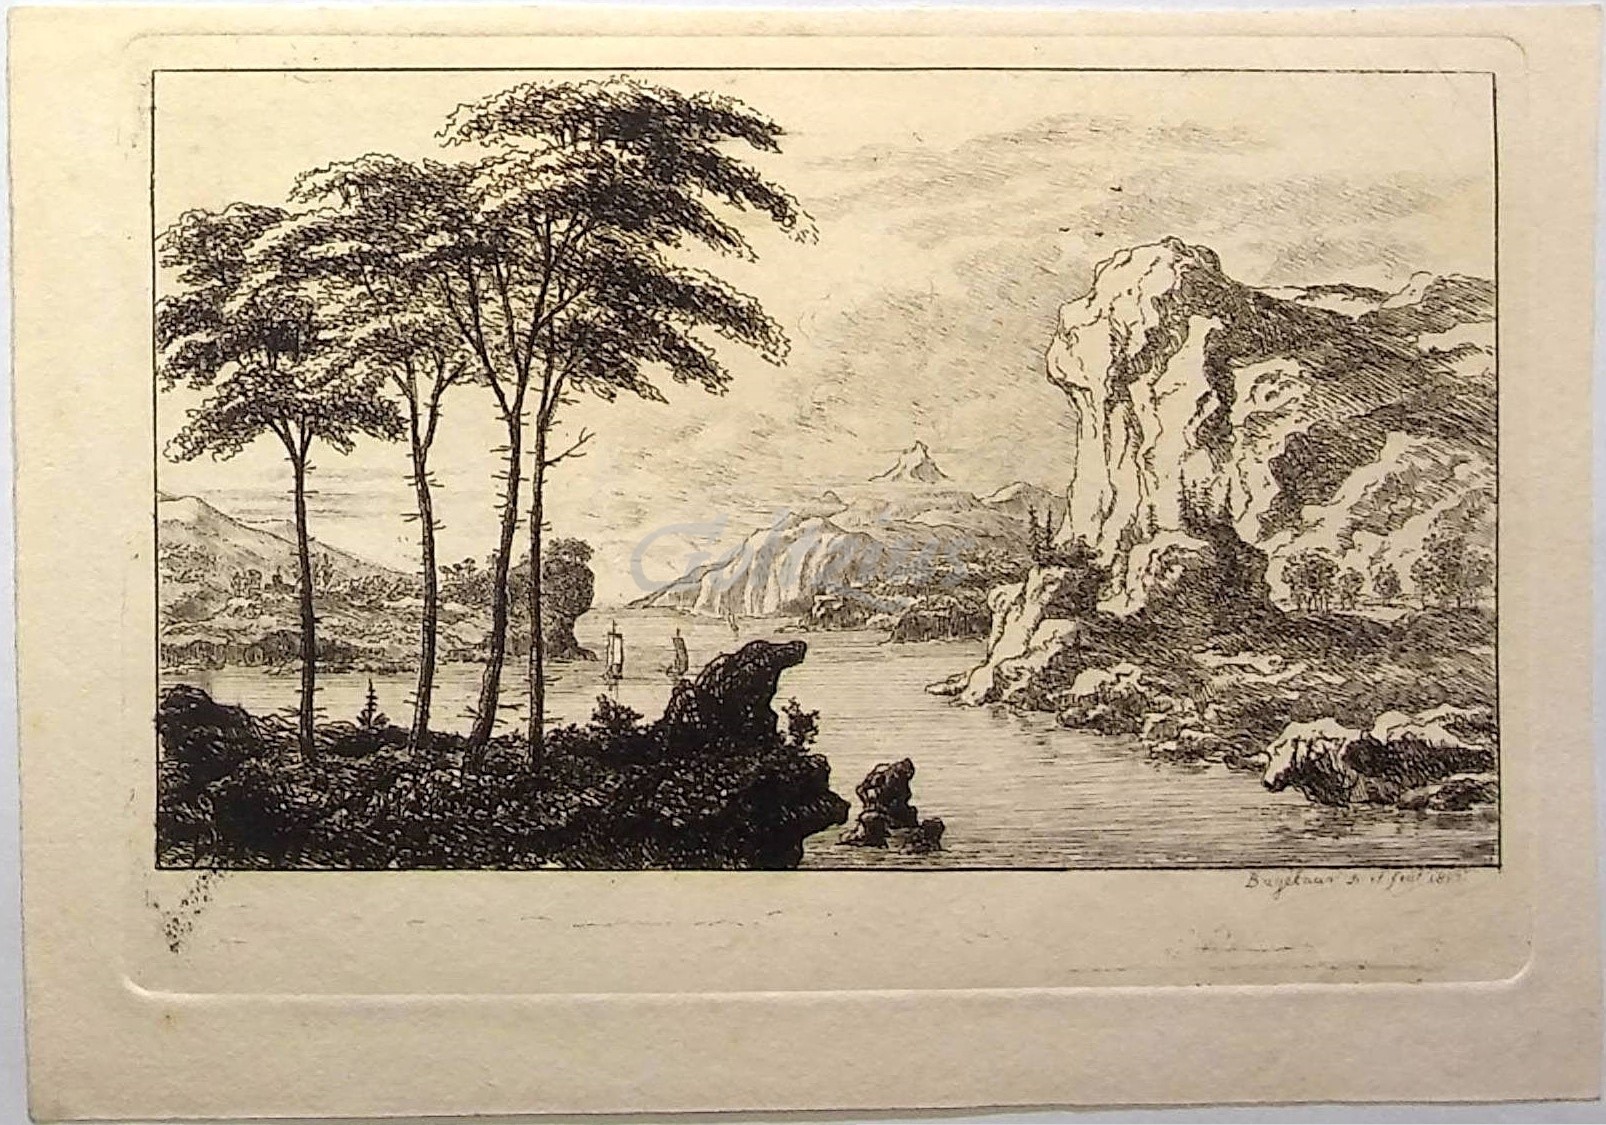 BAGELAAR, ERNST WILLEM JAN (1775-1837), Landscape near the Adriatic Sea